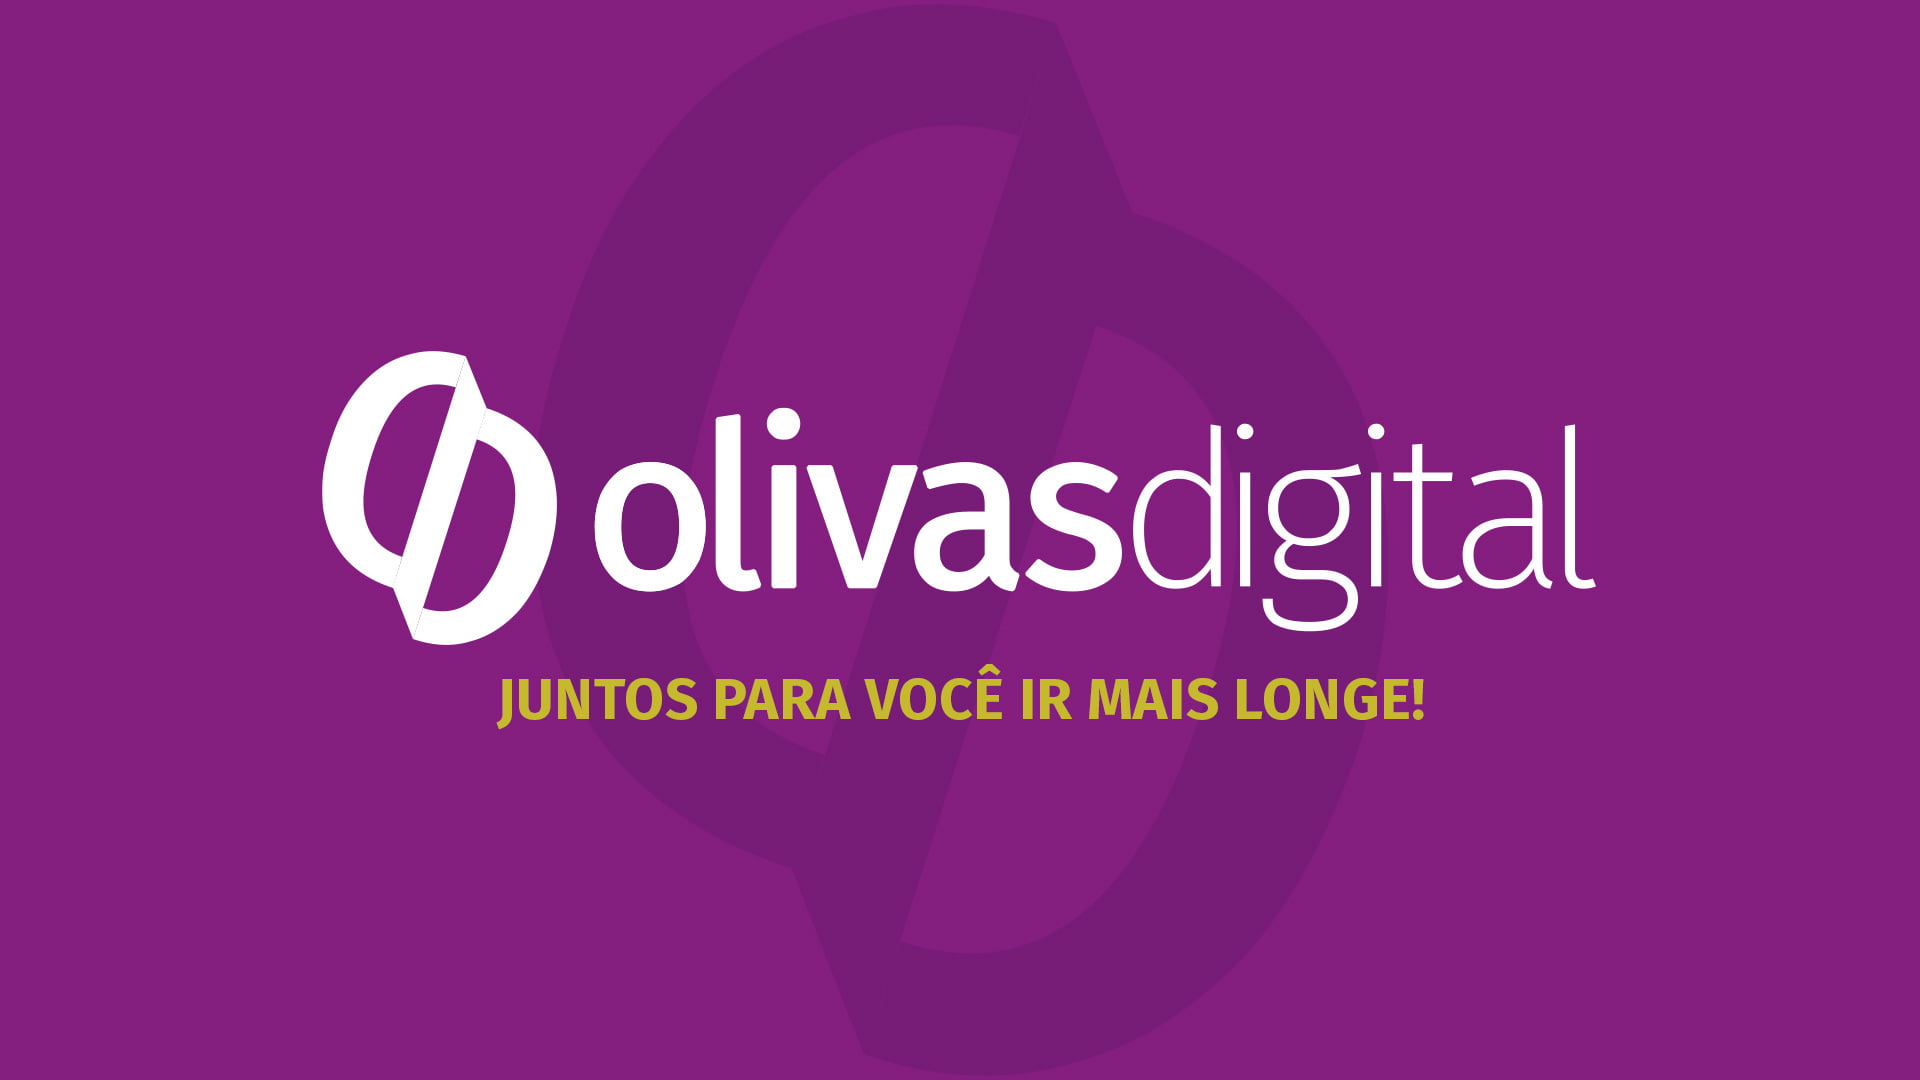 (c) Olivas.digital